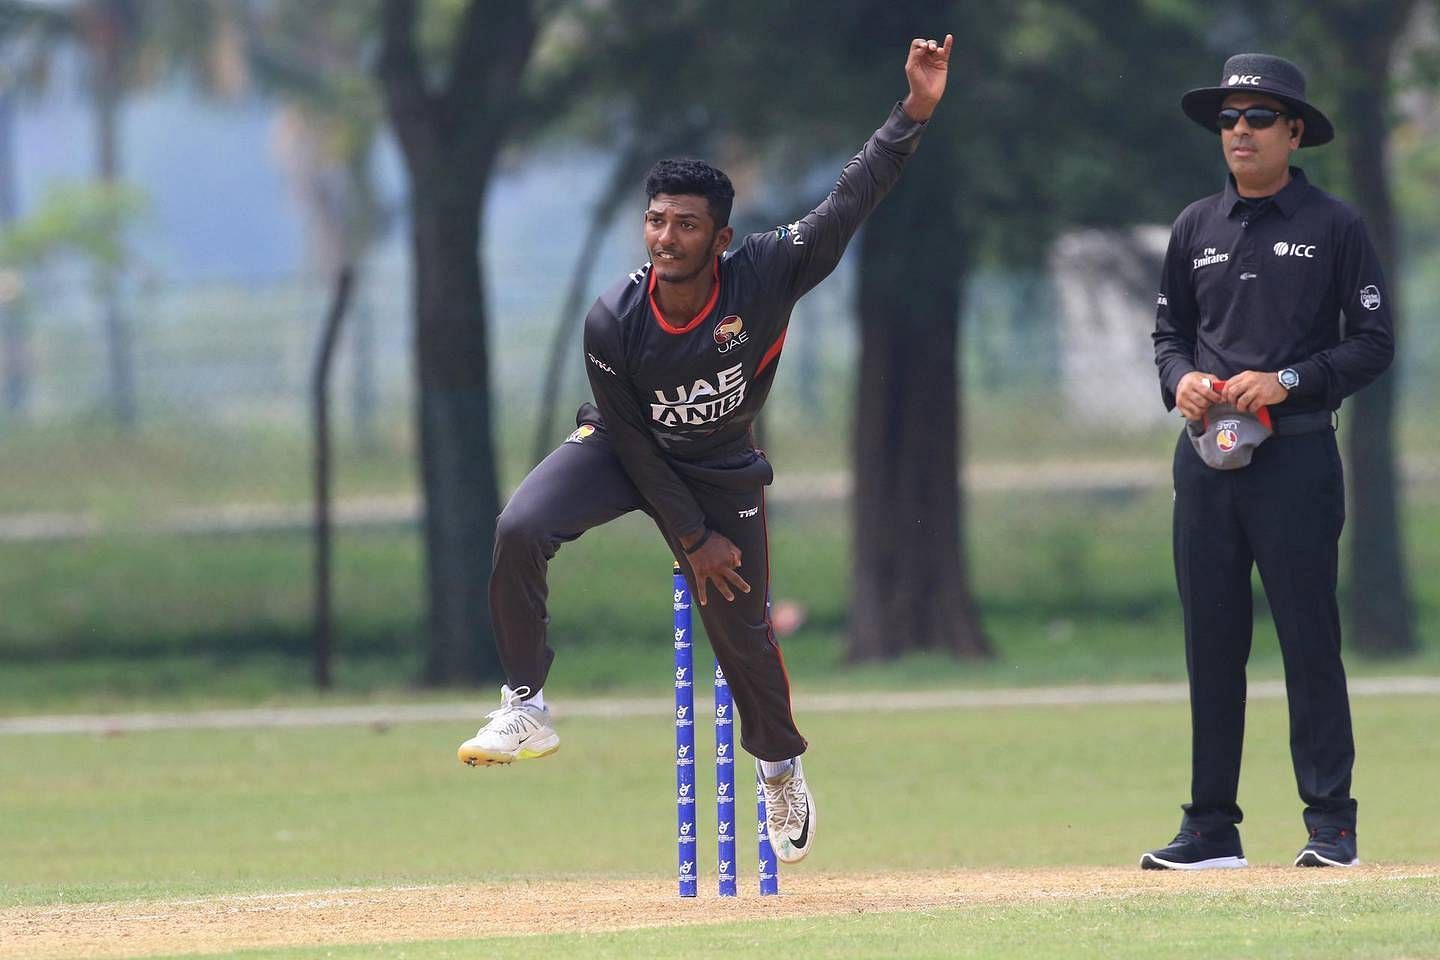 Meiyappan picked up a hat-trick against Sri Lanka. Pic Courtesy: thenationalnews.com